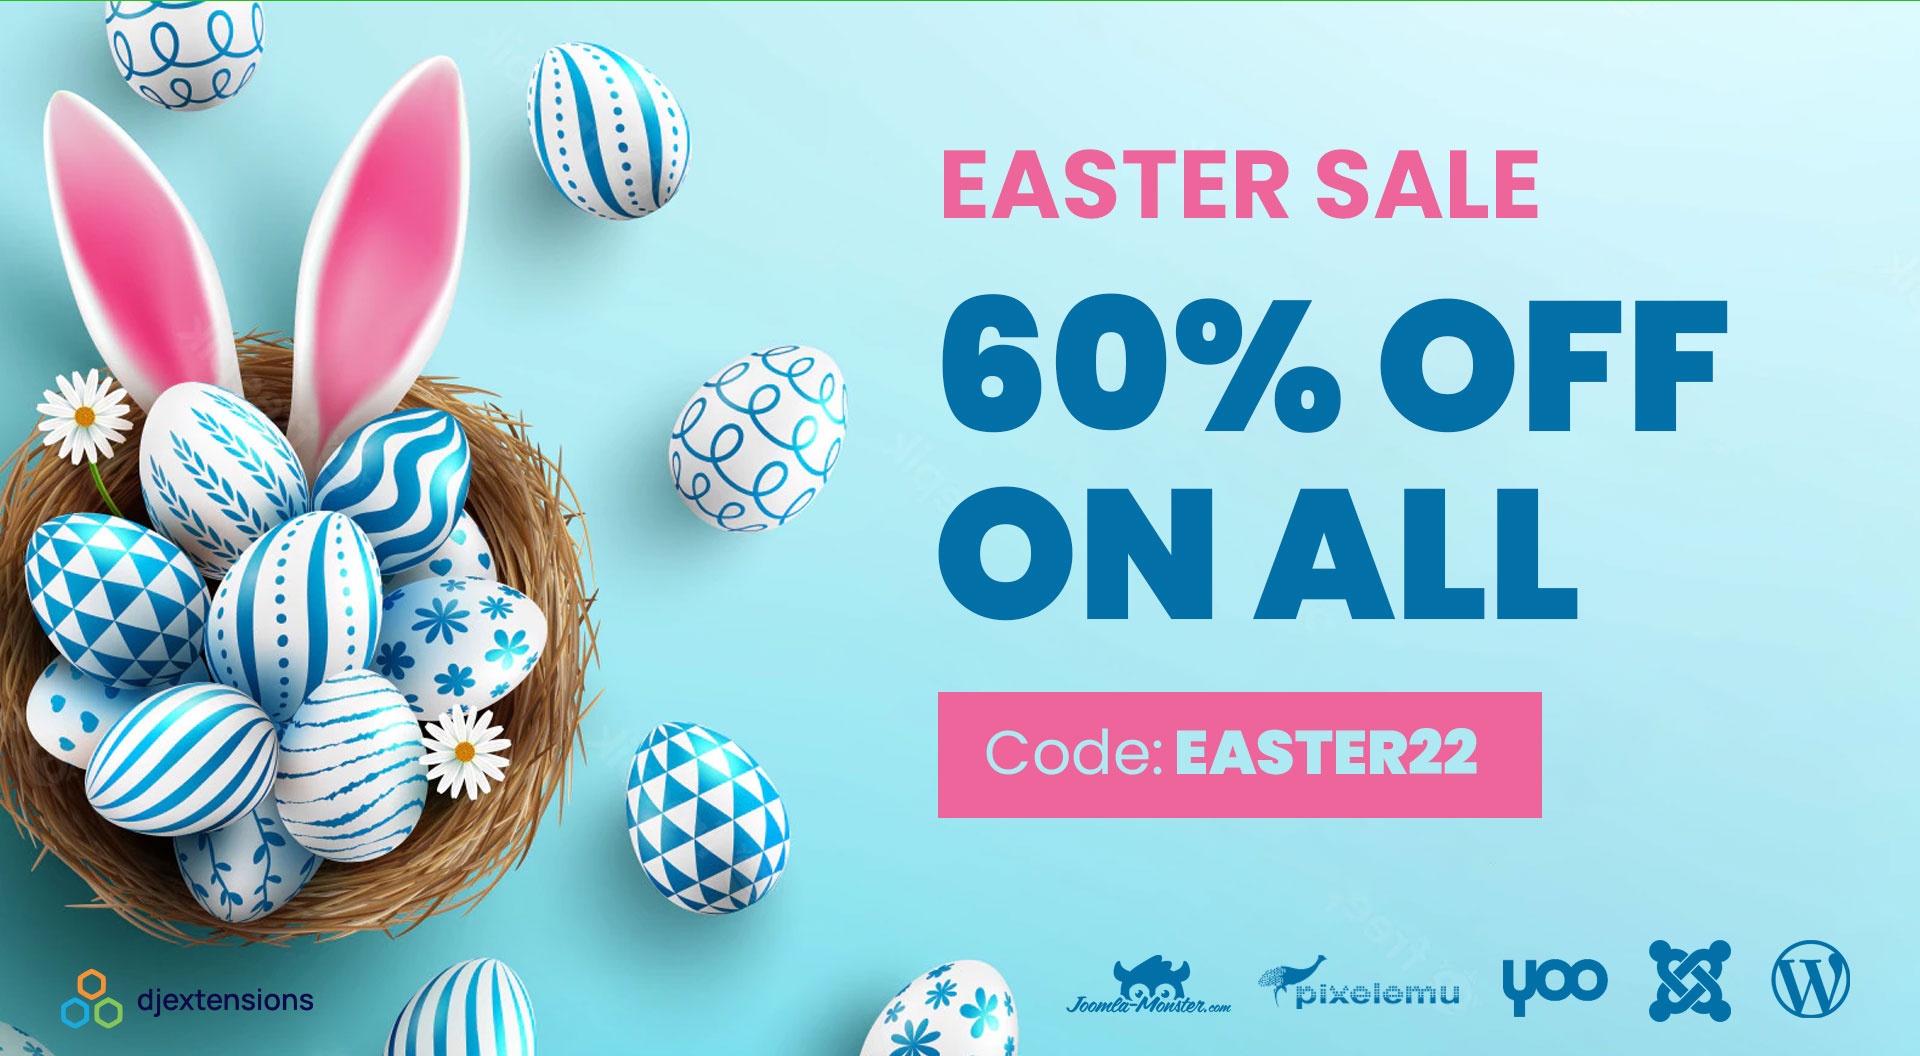 Joomla News: Easter Sale -60% OFF on Joomla and WordPress products